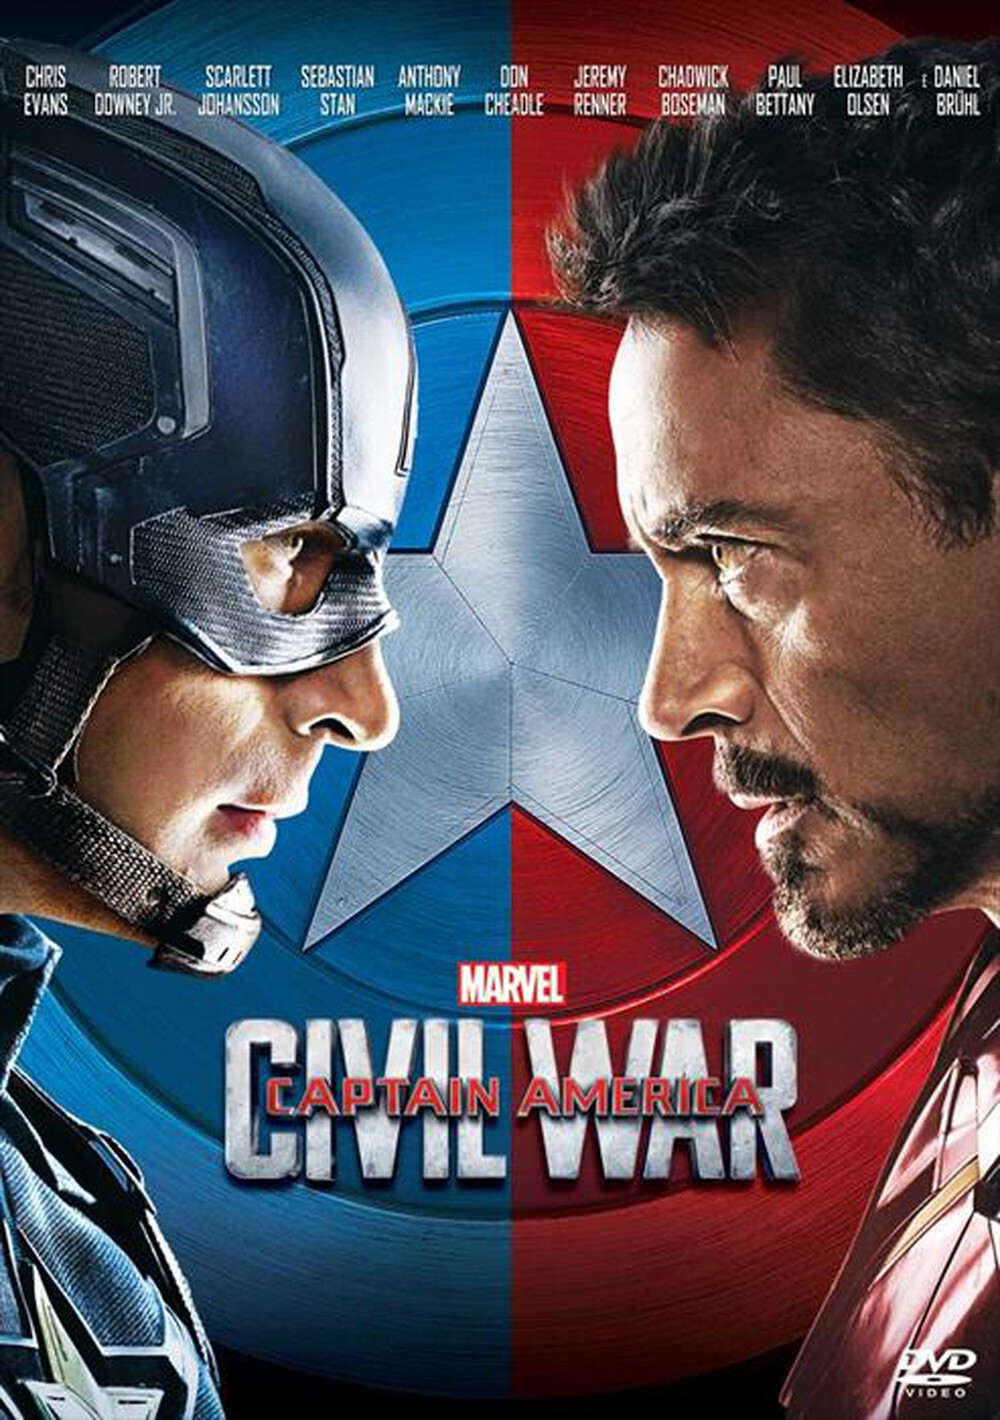 "WALT DISNEY - Captain America - Civil War"